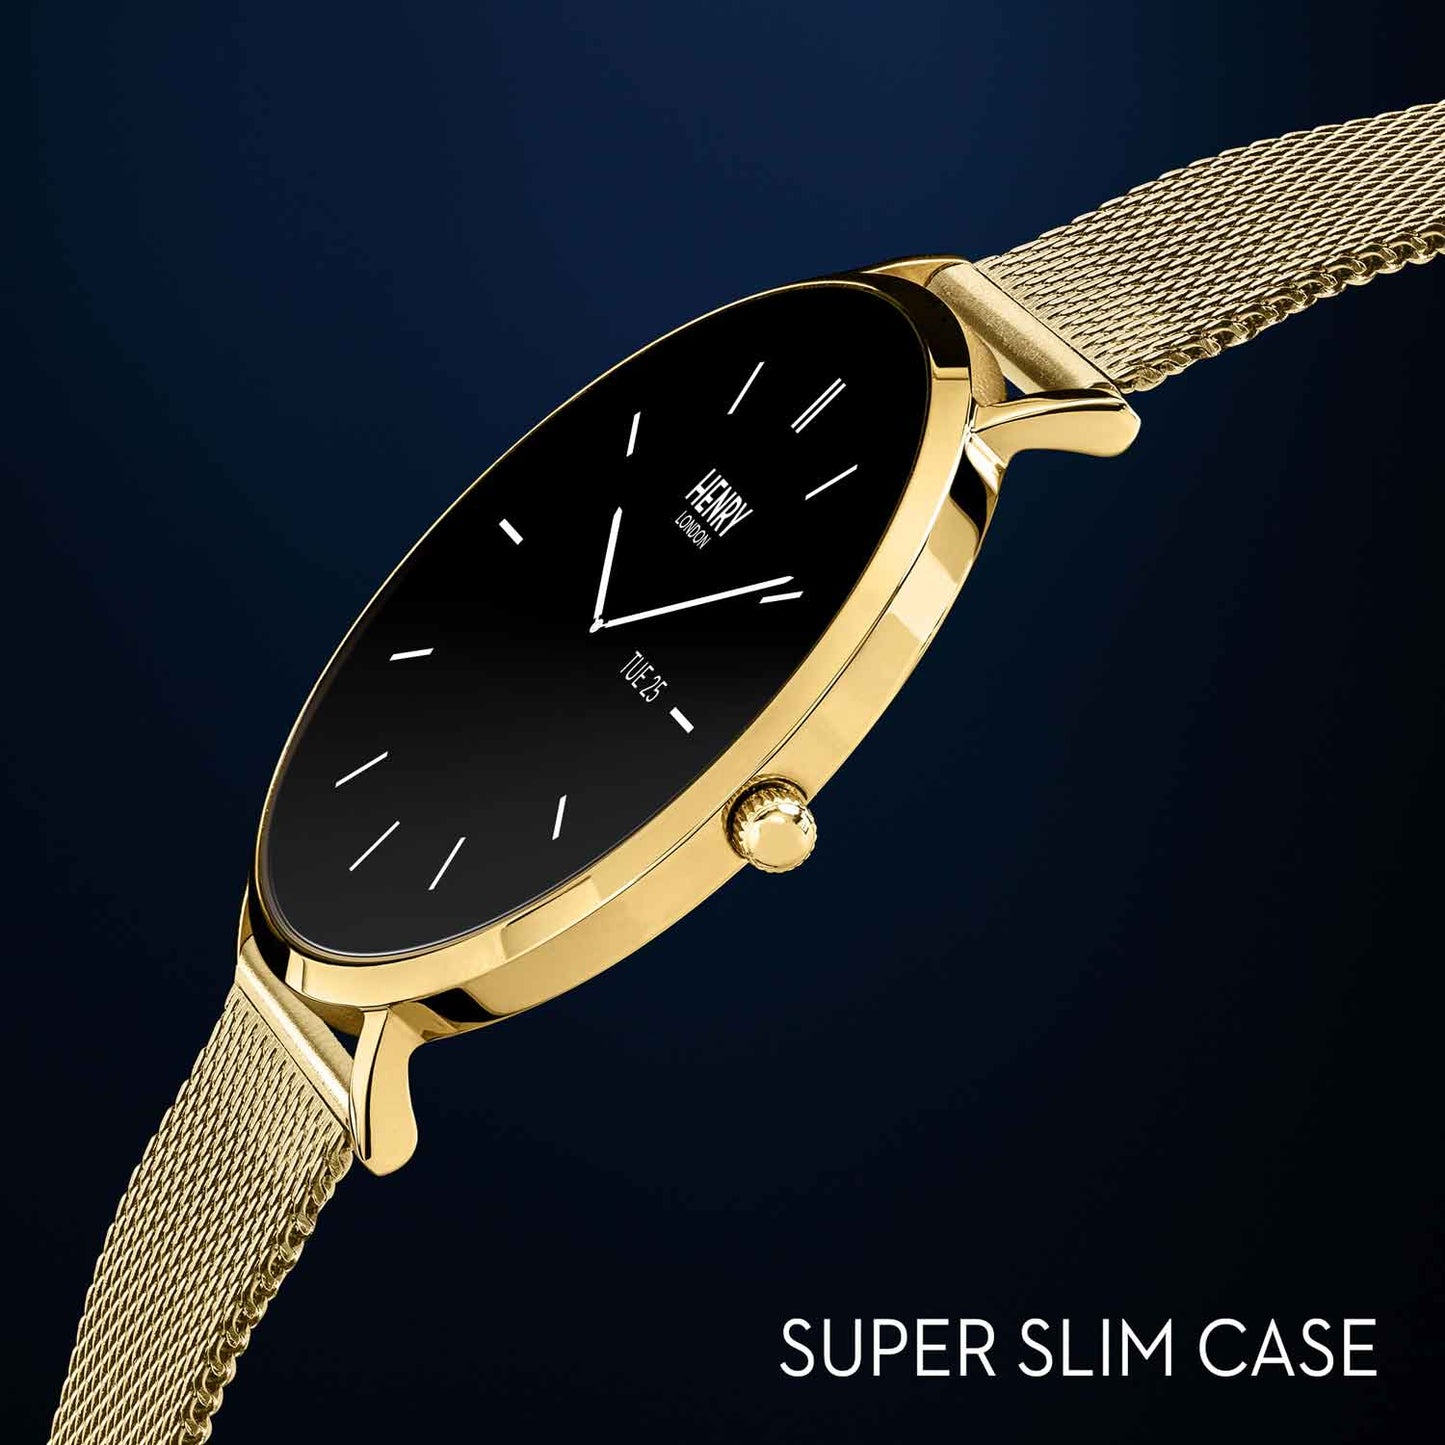 Henry London HLS65-0006 Smartwatch Gold Stainless Steel Bracelet